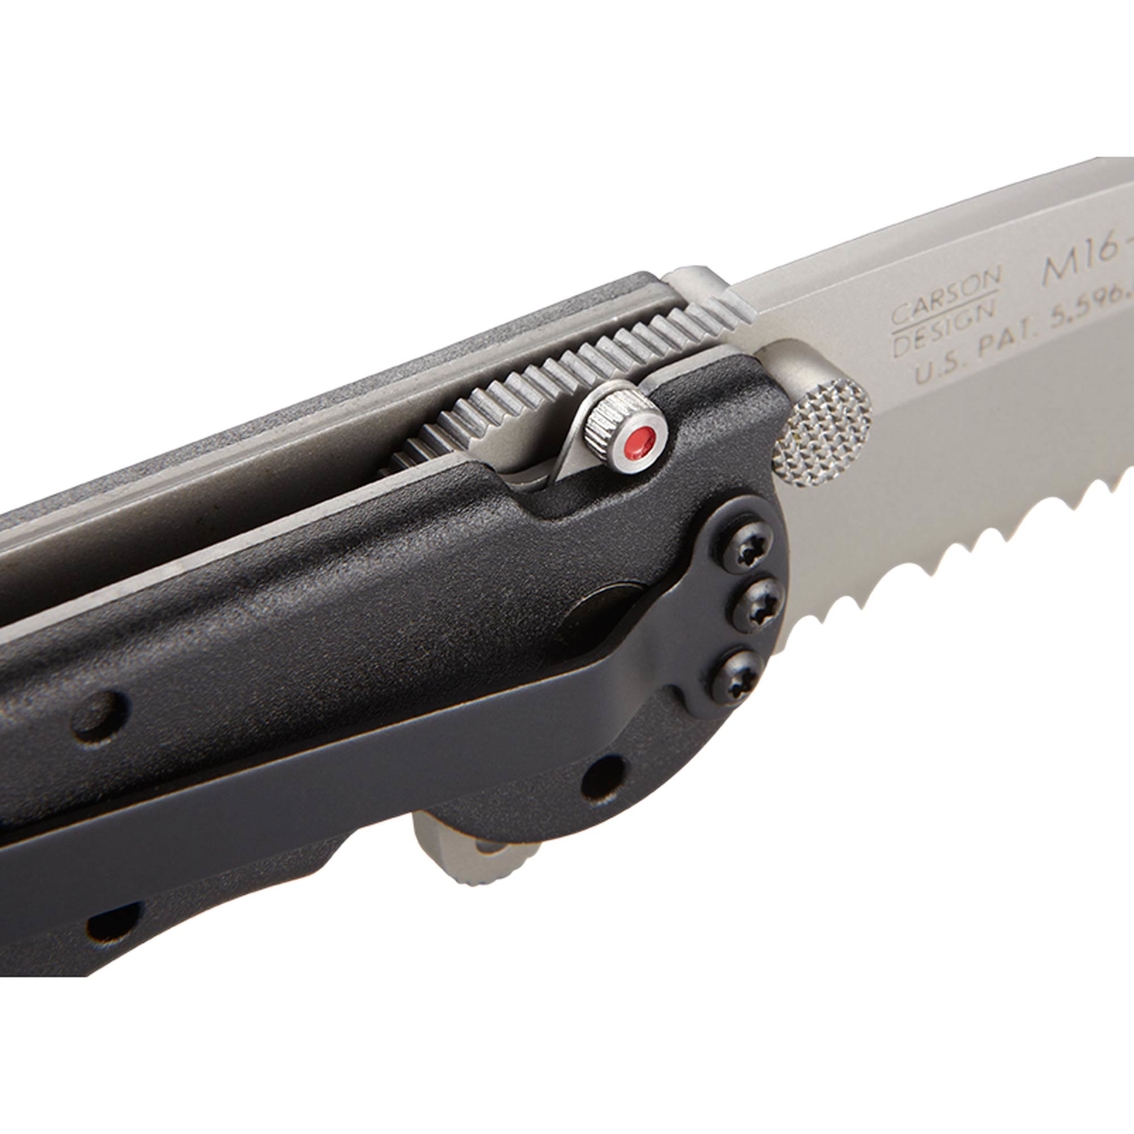 Columbia River Knife & Tool M16-12Z Clip Folder Knife - Image 3 of 4